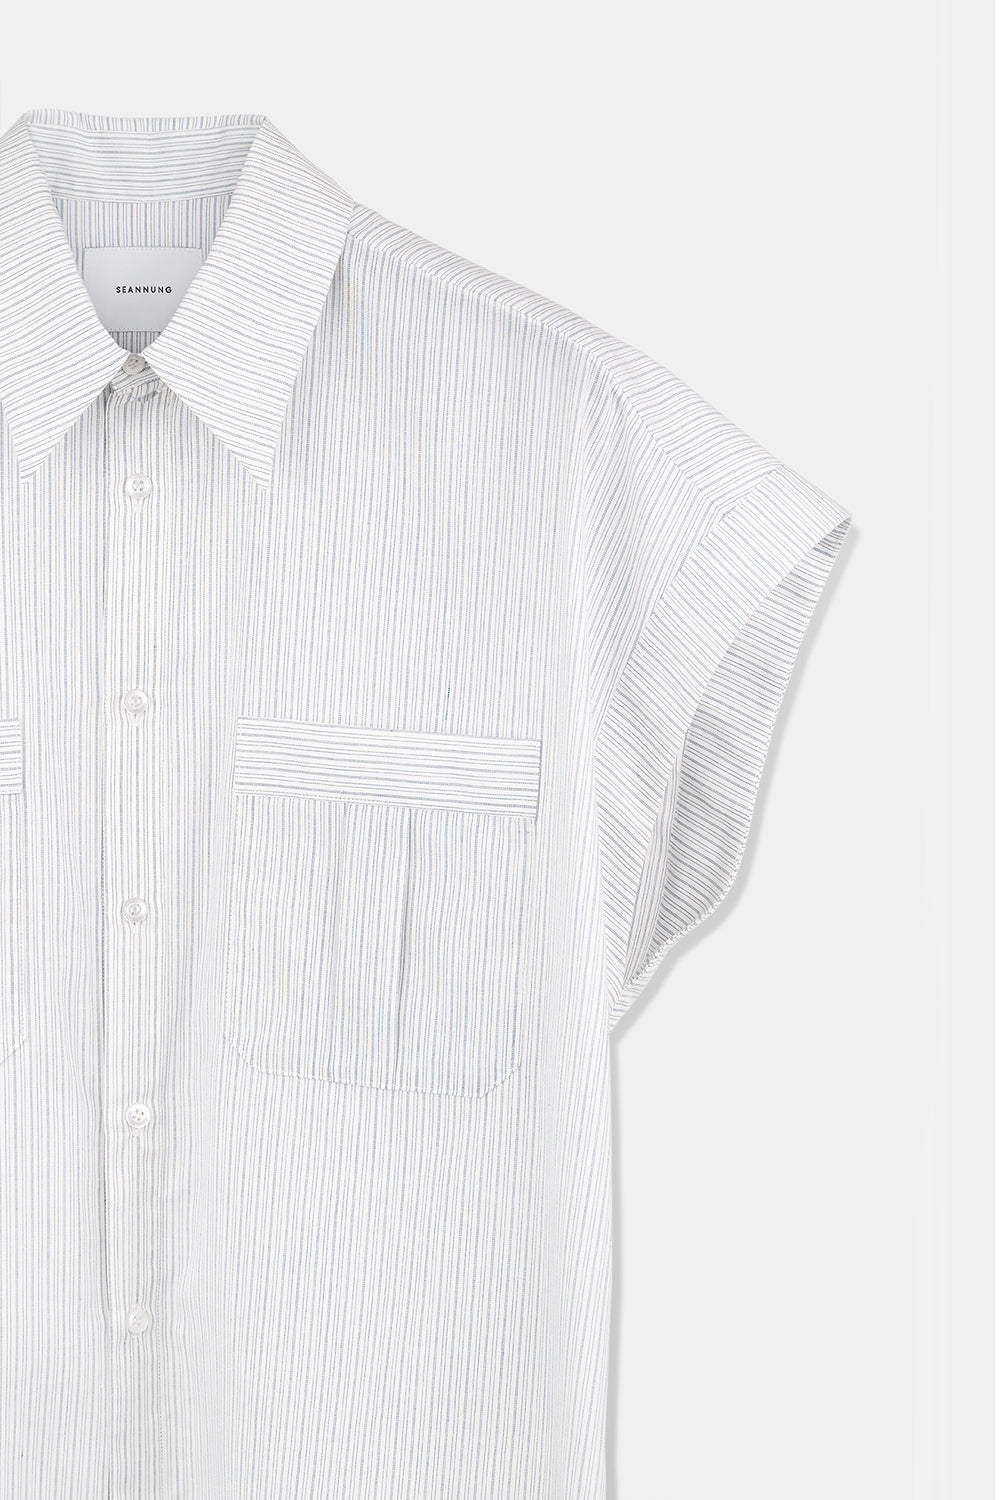 SEANNUNG - MEN - Striped Pattern Raglan Sleeve Shirt 條紋連袖襯衫